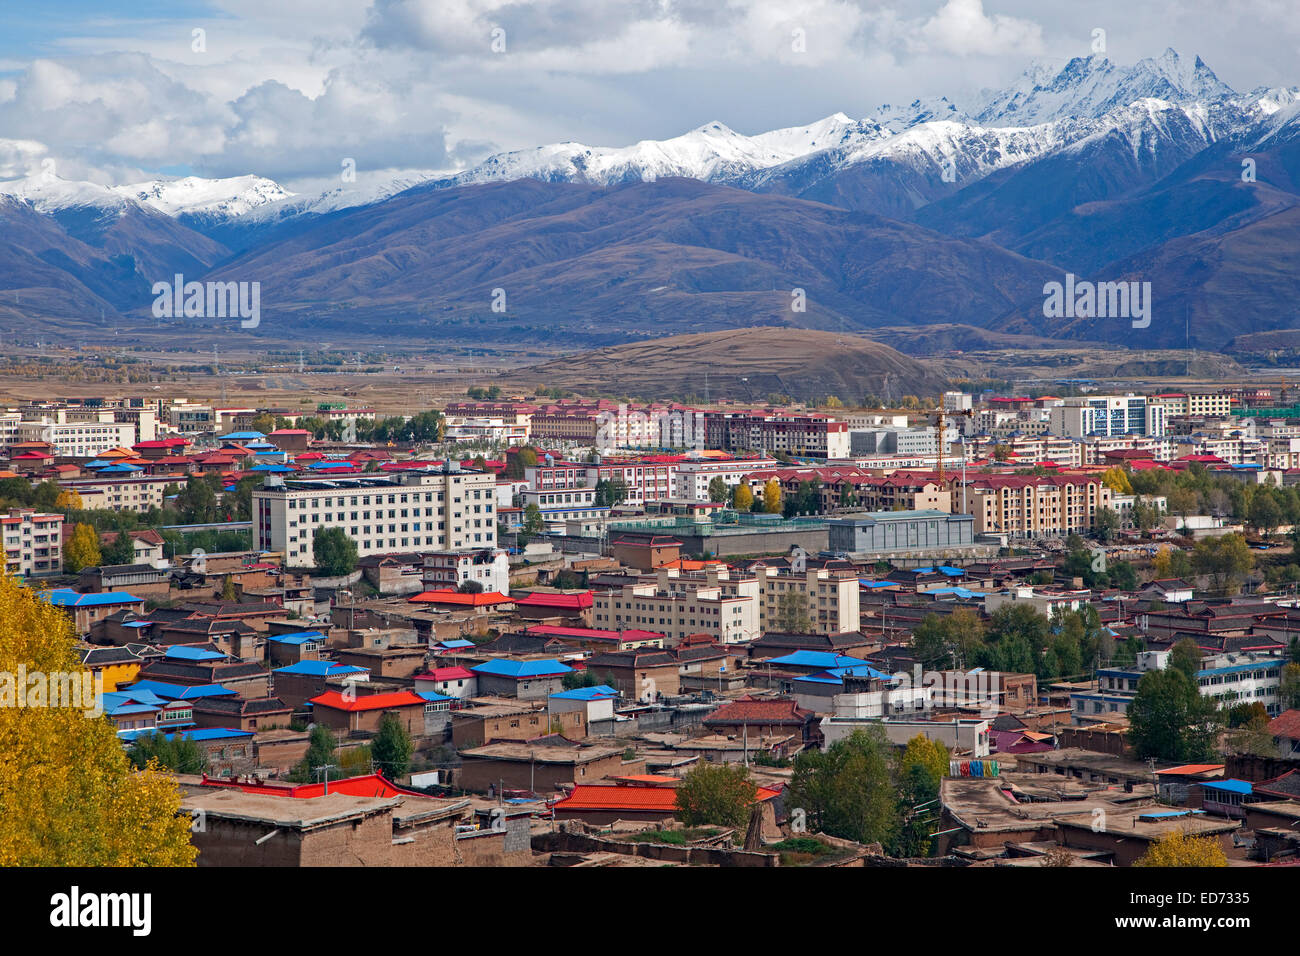 Vista sulla città del Tibet Garze / Ganzi, nella provincia di Sichuan, in Cina Foto Stock